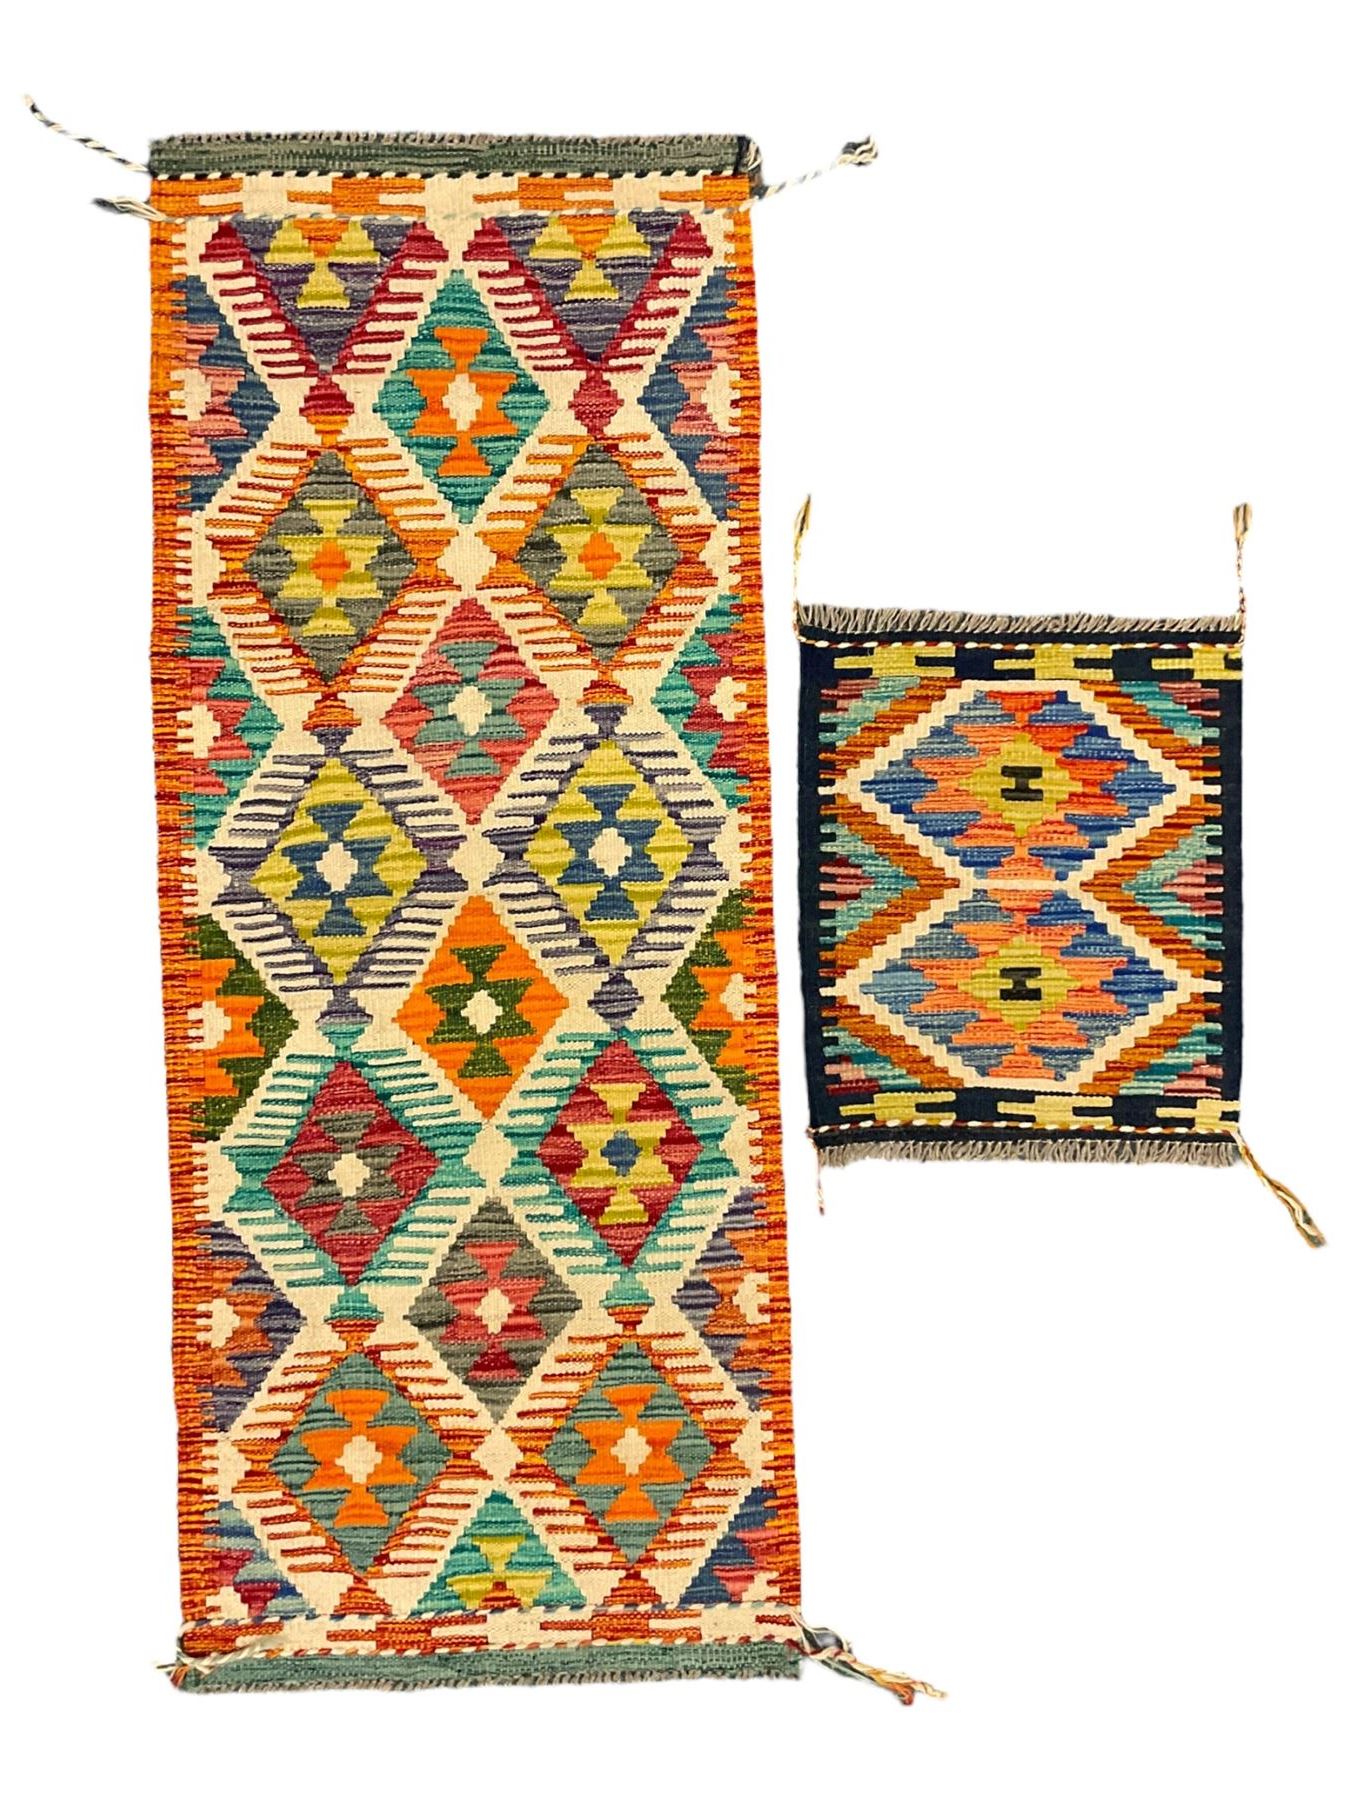 Chobi Kilim multi-coloured geometric design runner (154cm x 61cm); and a similar small mat (45cm x 5